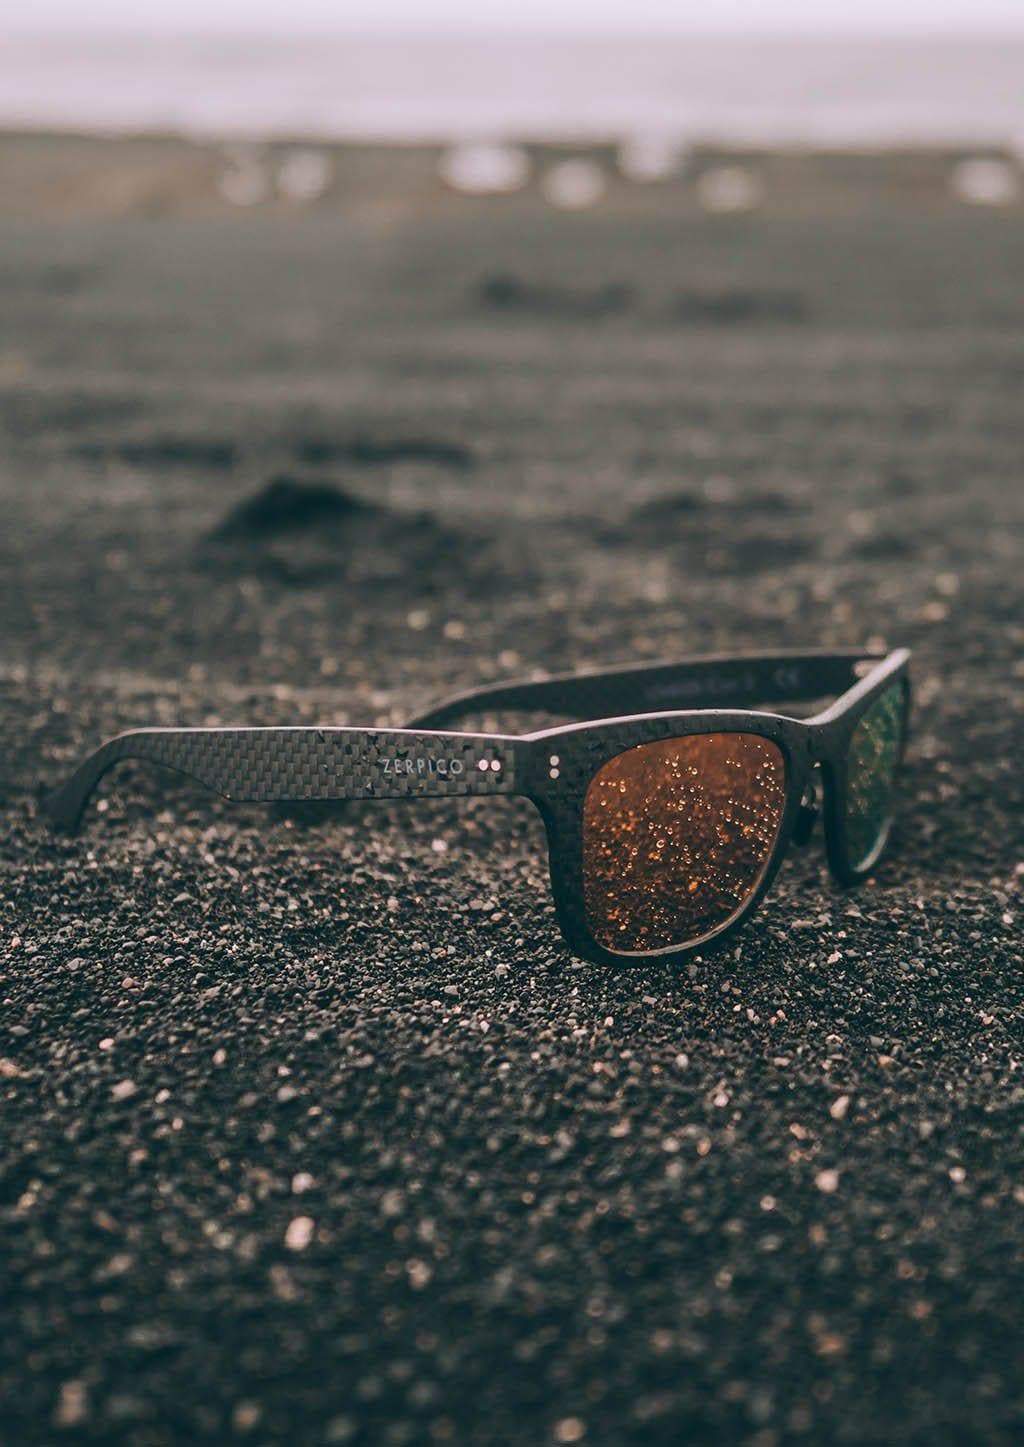 Fibrous V4 Wayfarer - Carbon Fiber Sunglasses